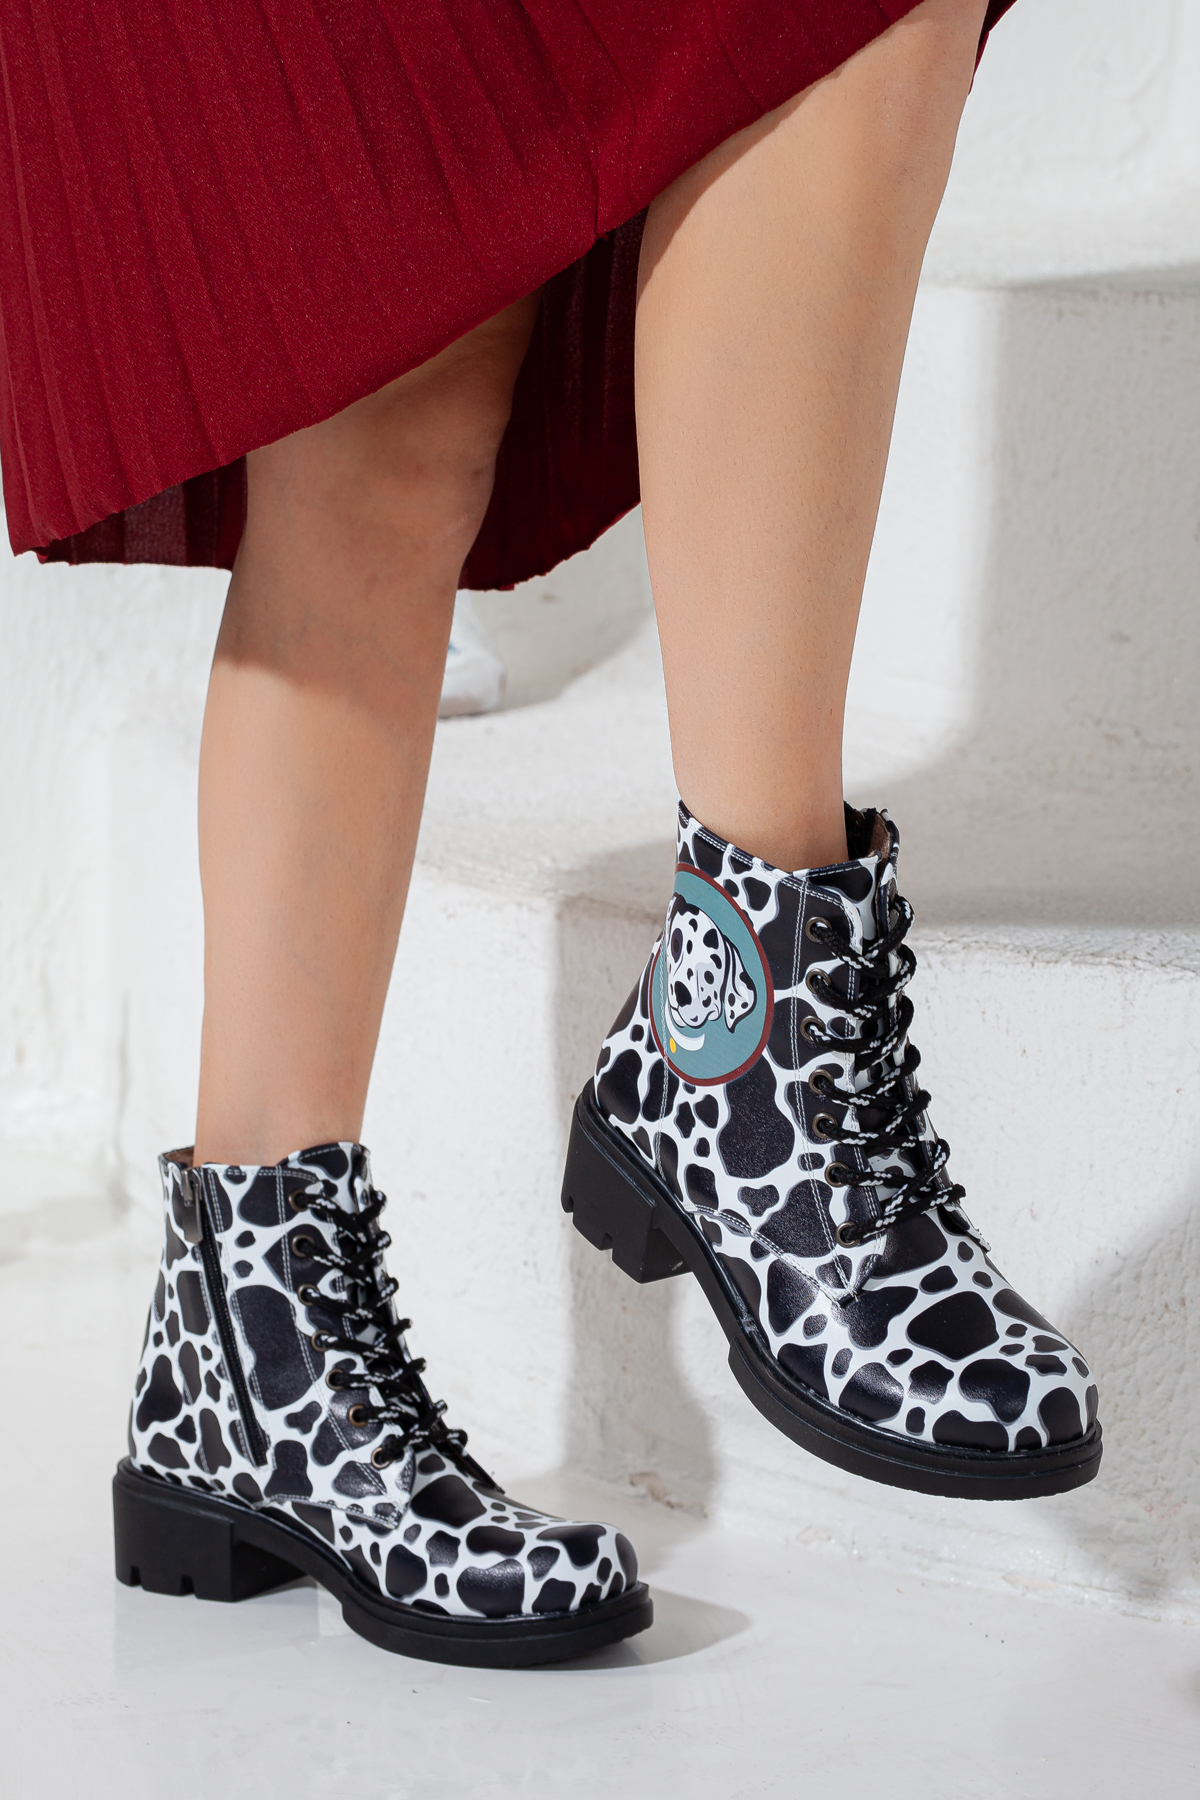 Black and white dalmatian dog print boots